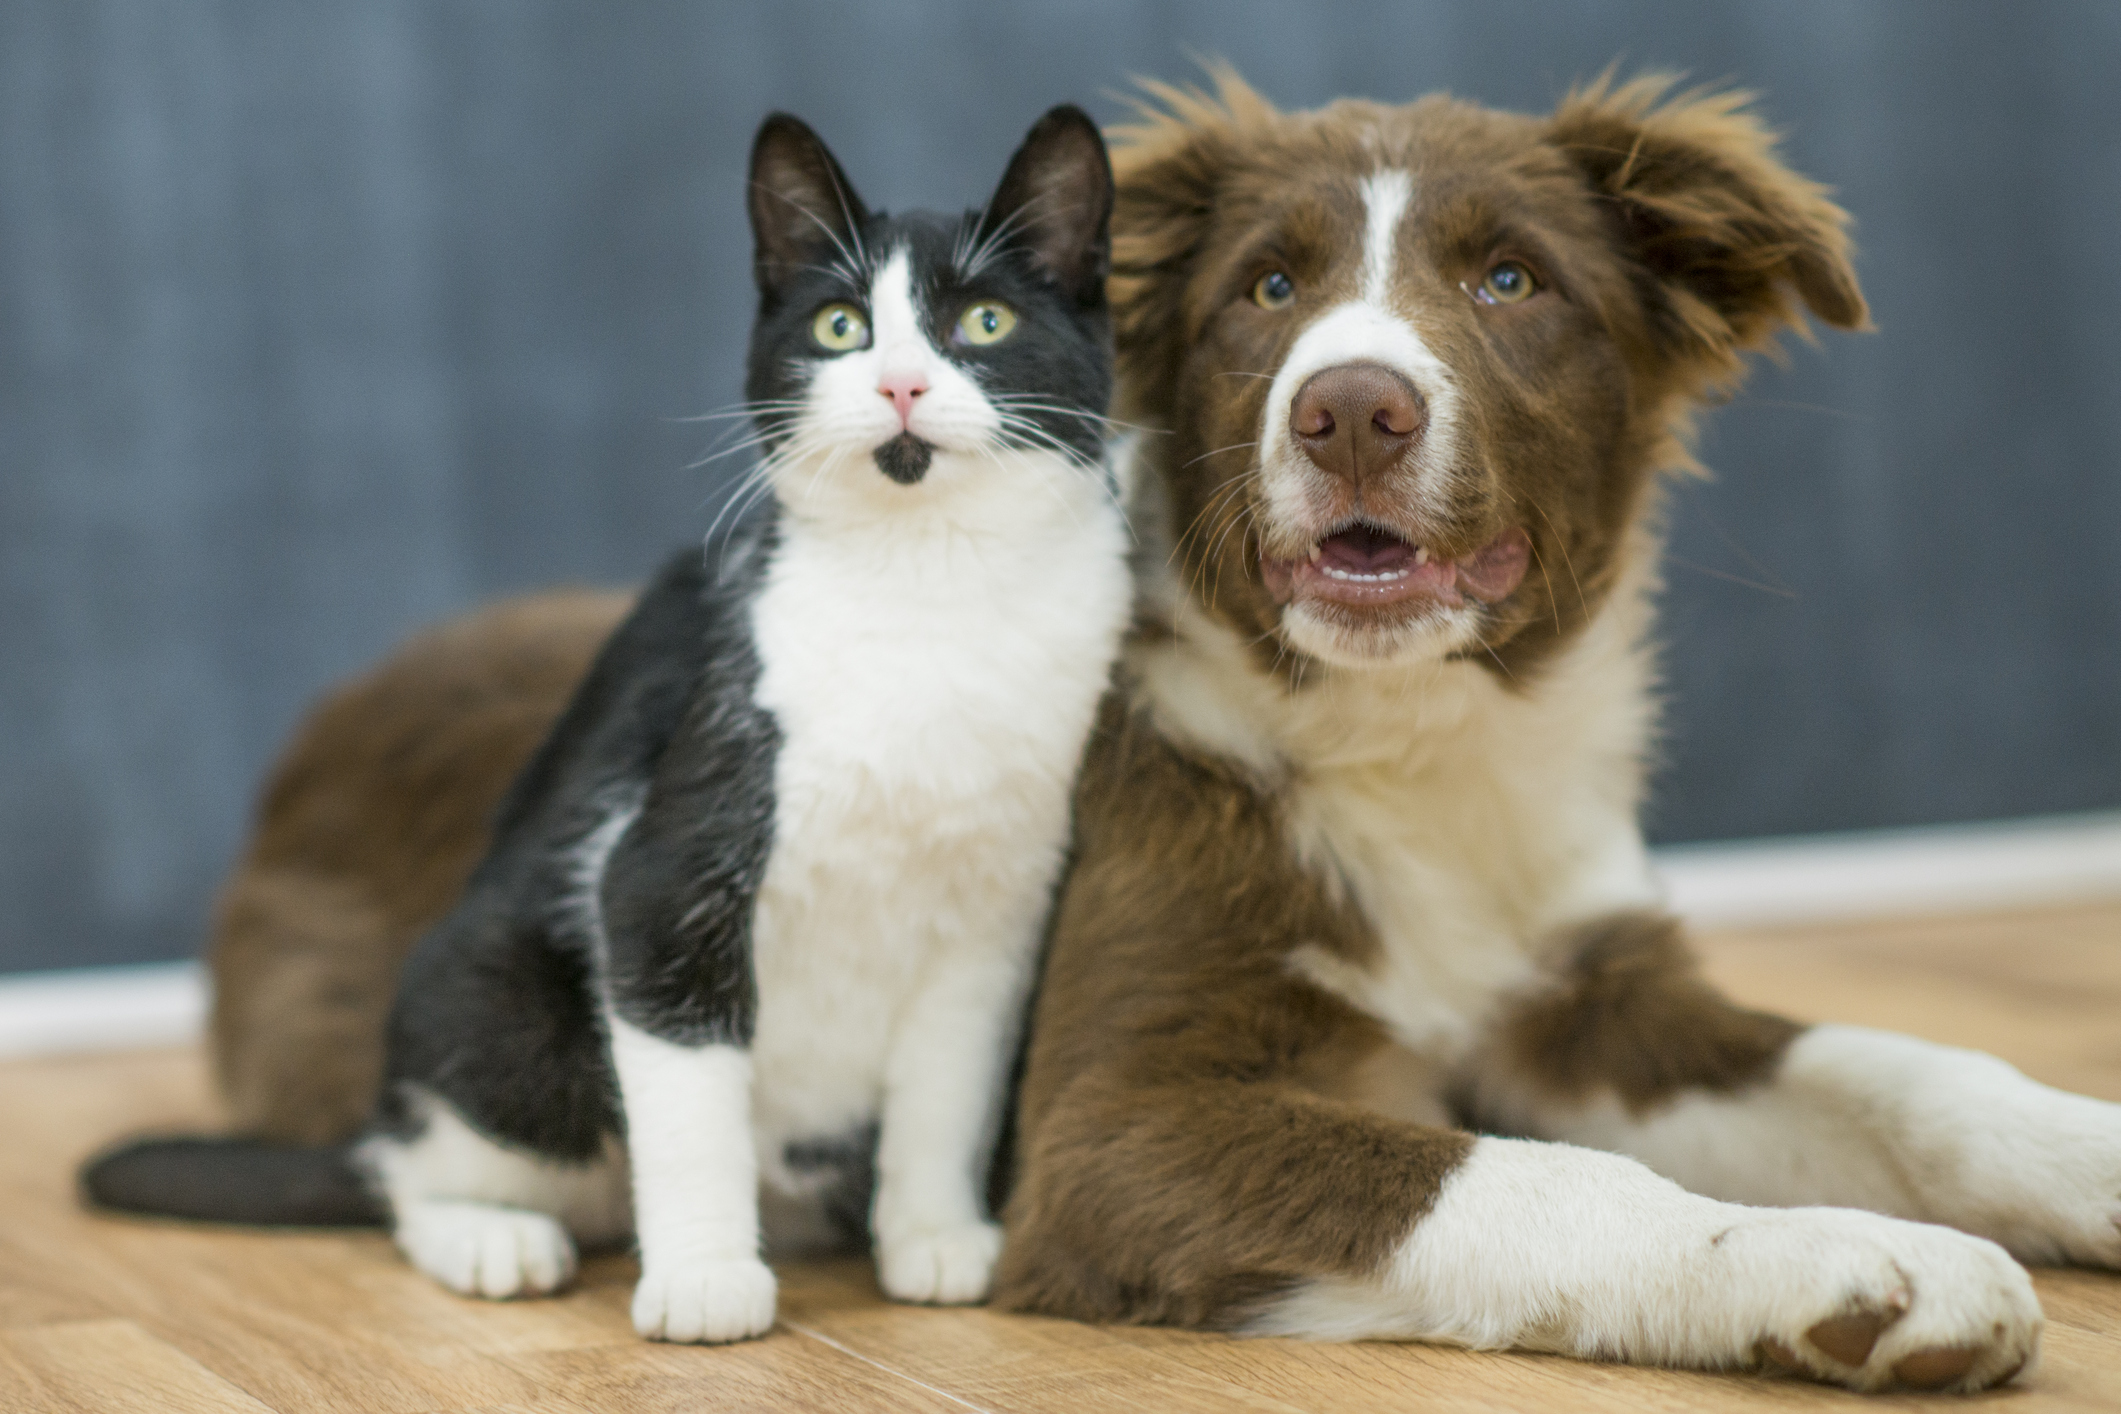 Adopt your new best friend! — Companion Animal Alliance